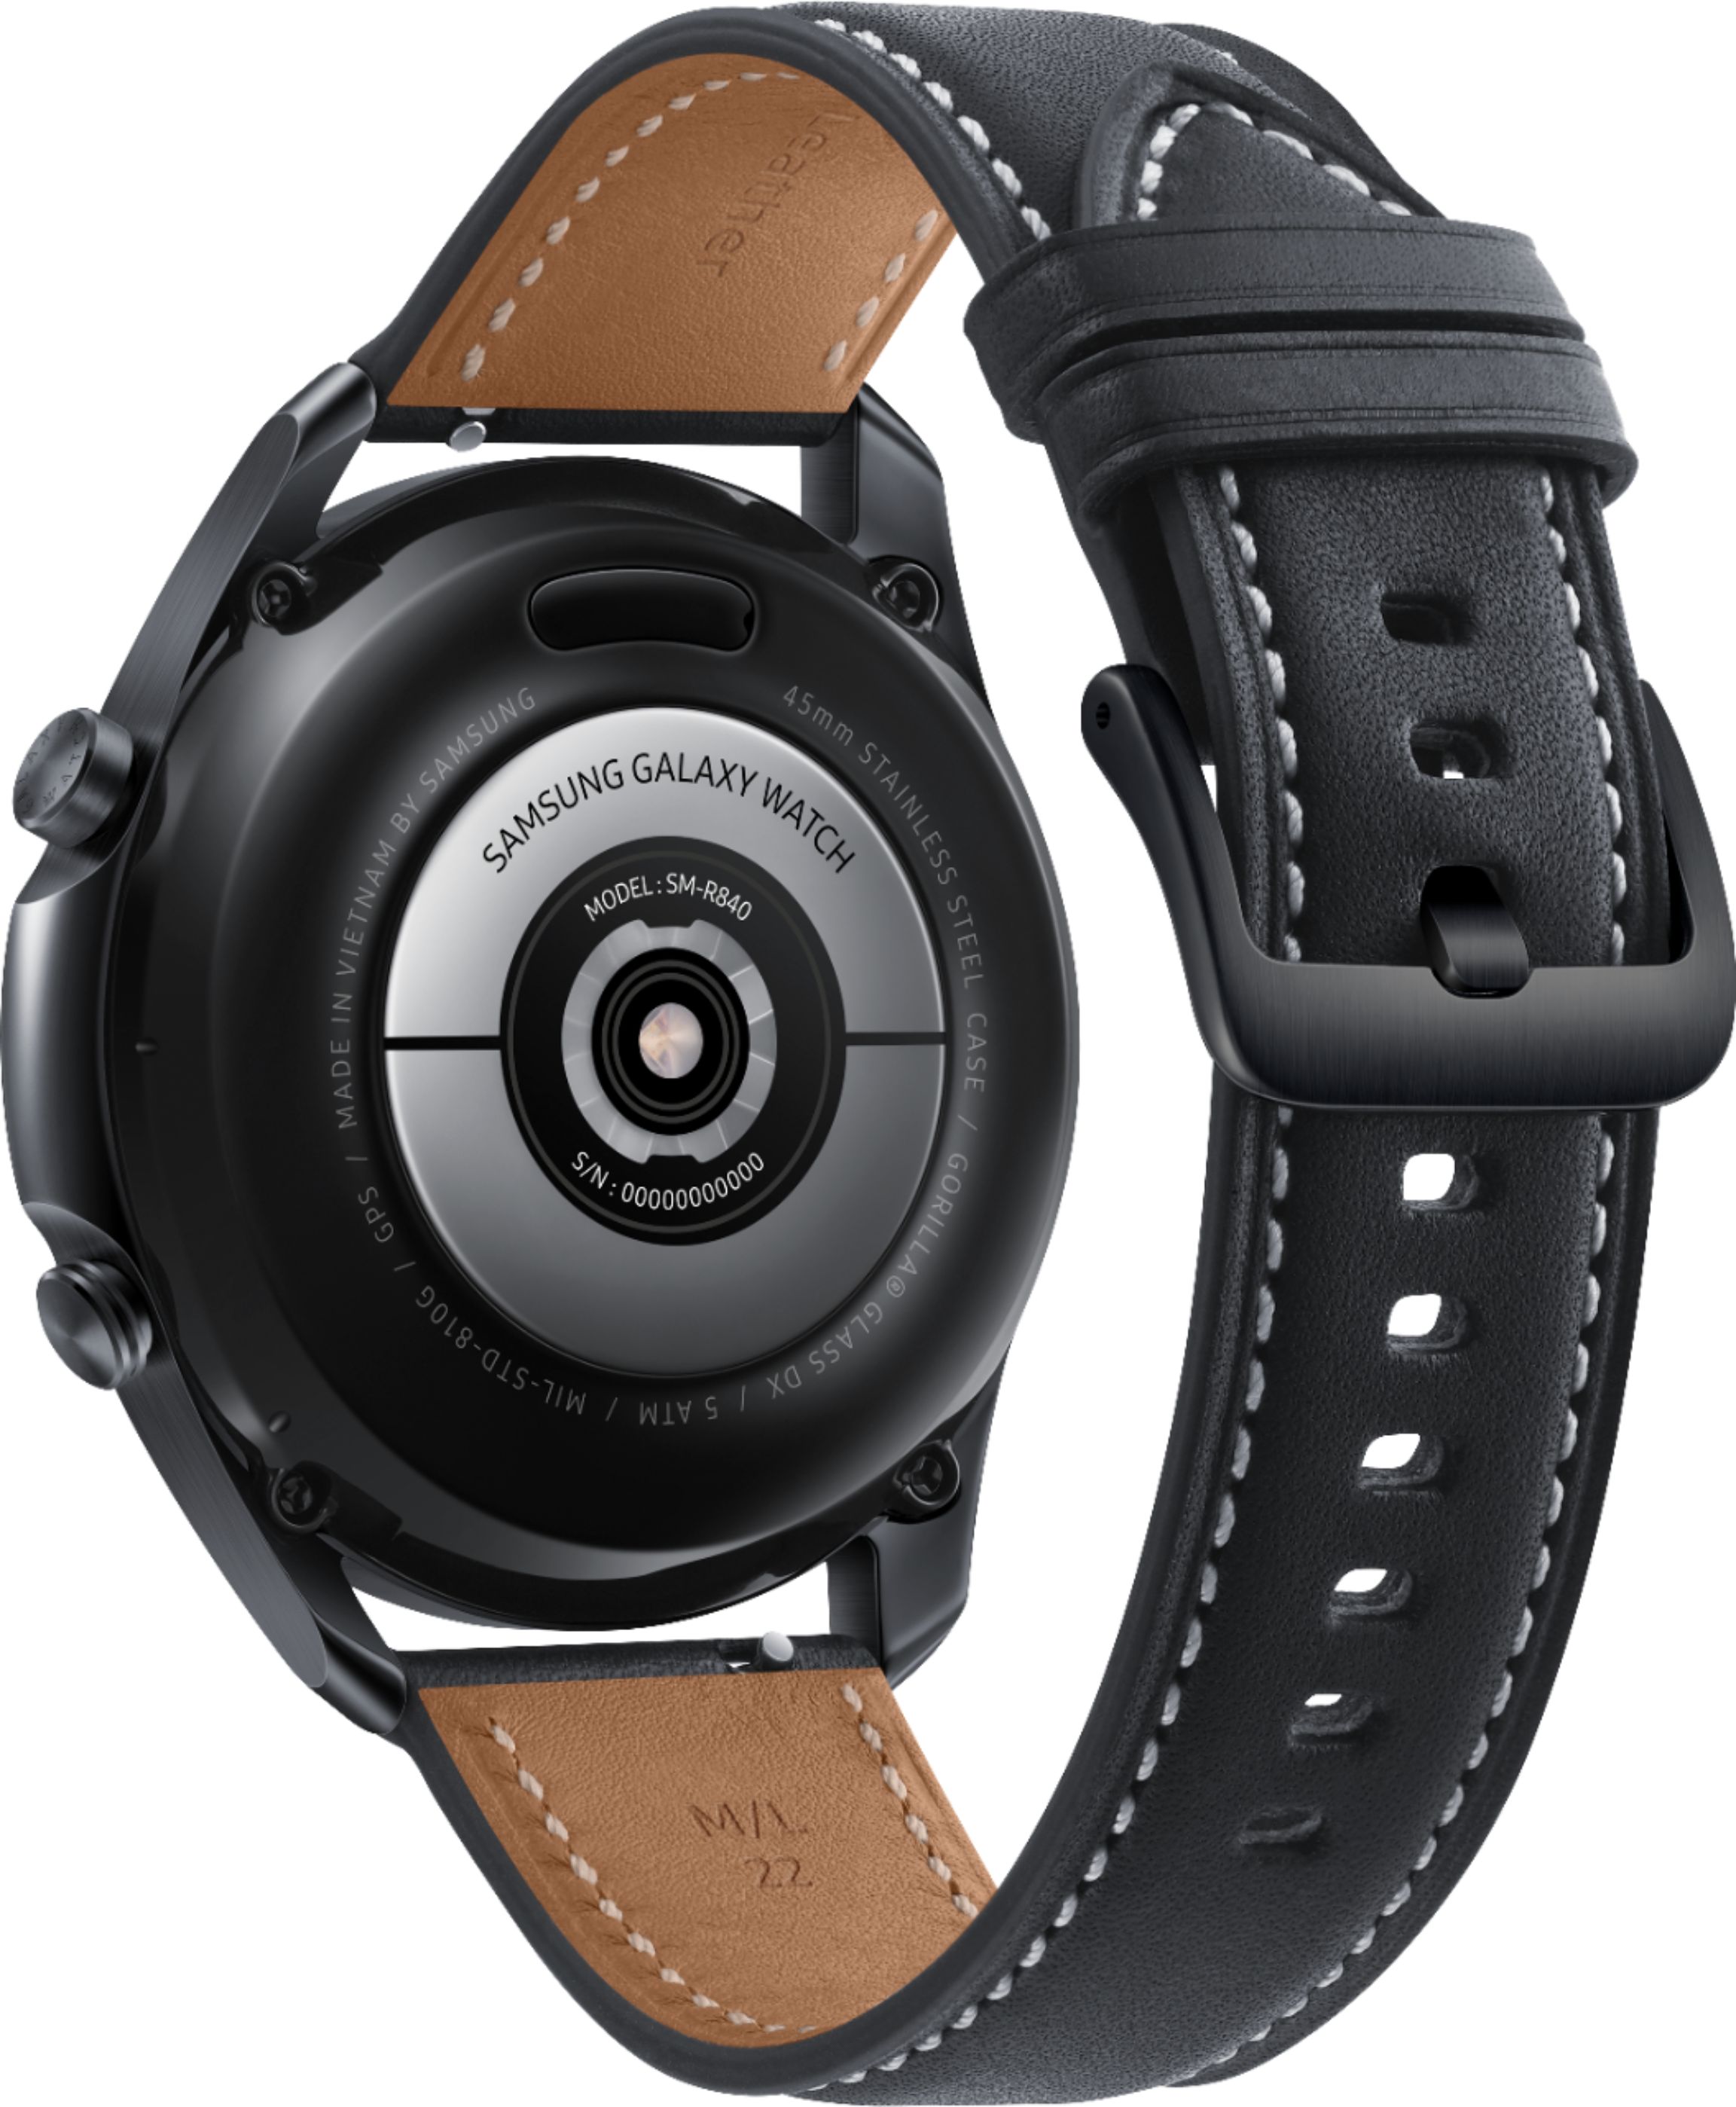 Samsung Geek Squad Certified Refurbished Galaxy Watch3 Smartwatch ...